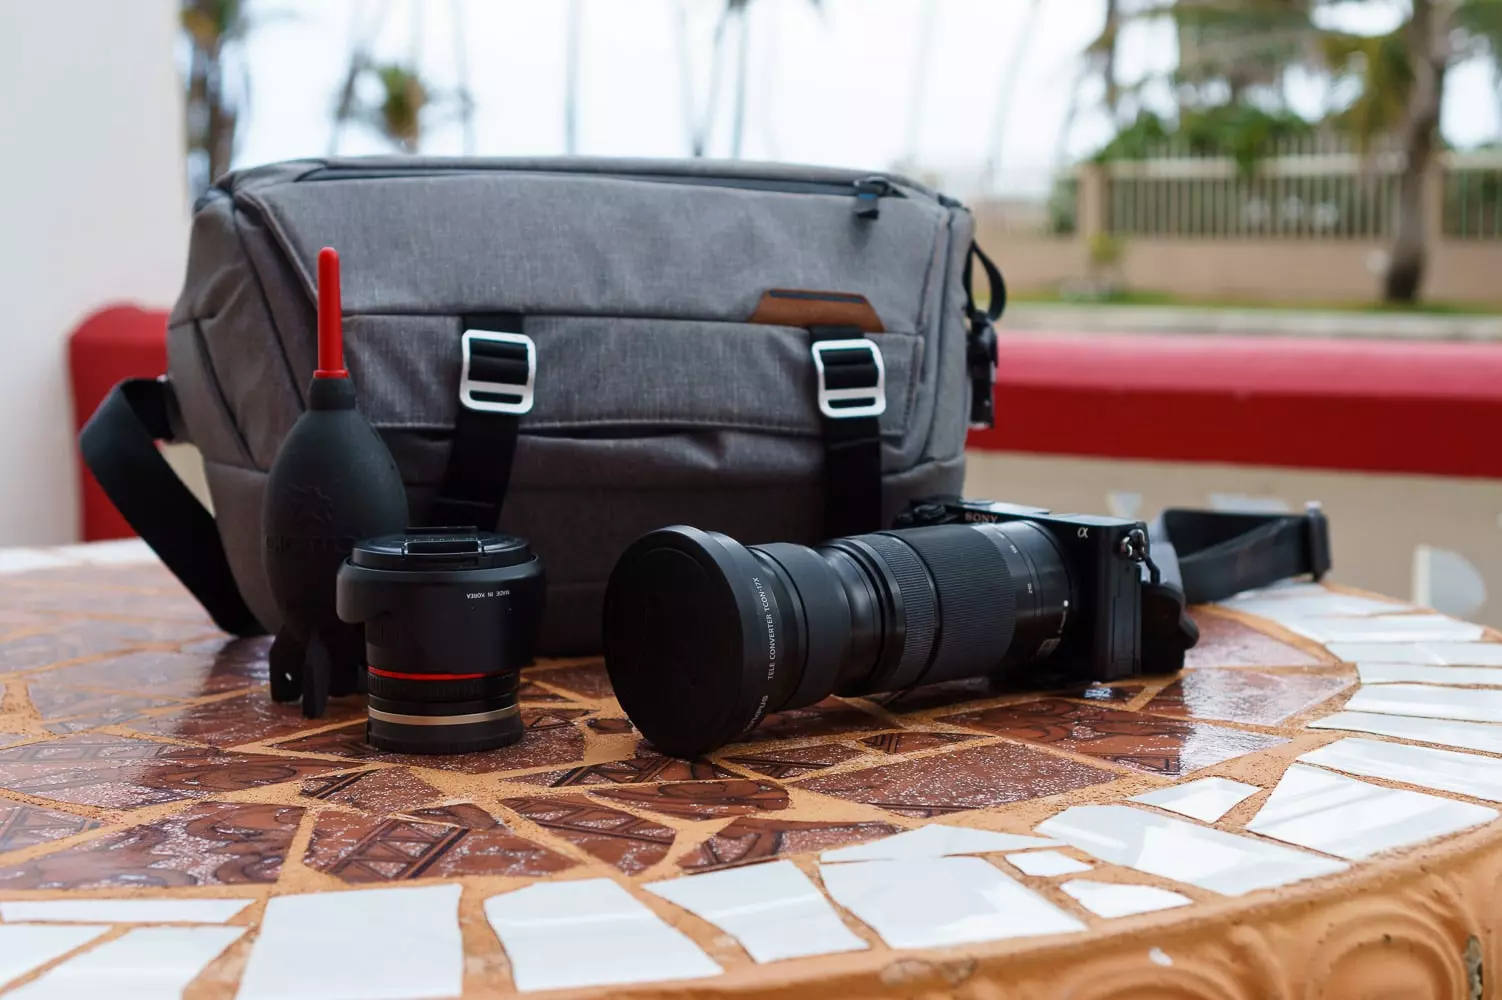 Peak Design Everyday Sling - The Best Mirrorless Camera Bag for Travel